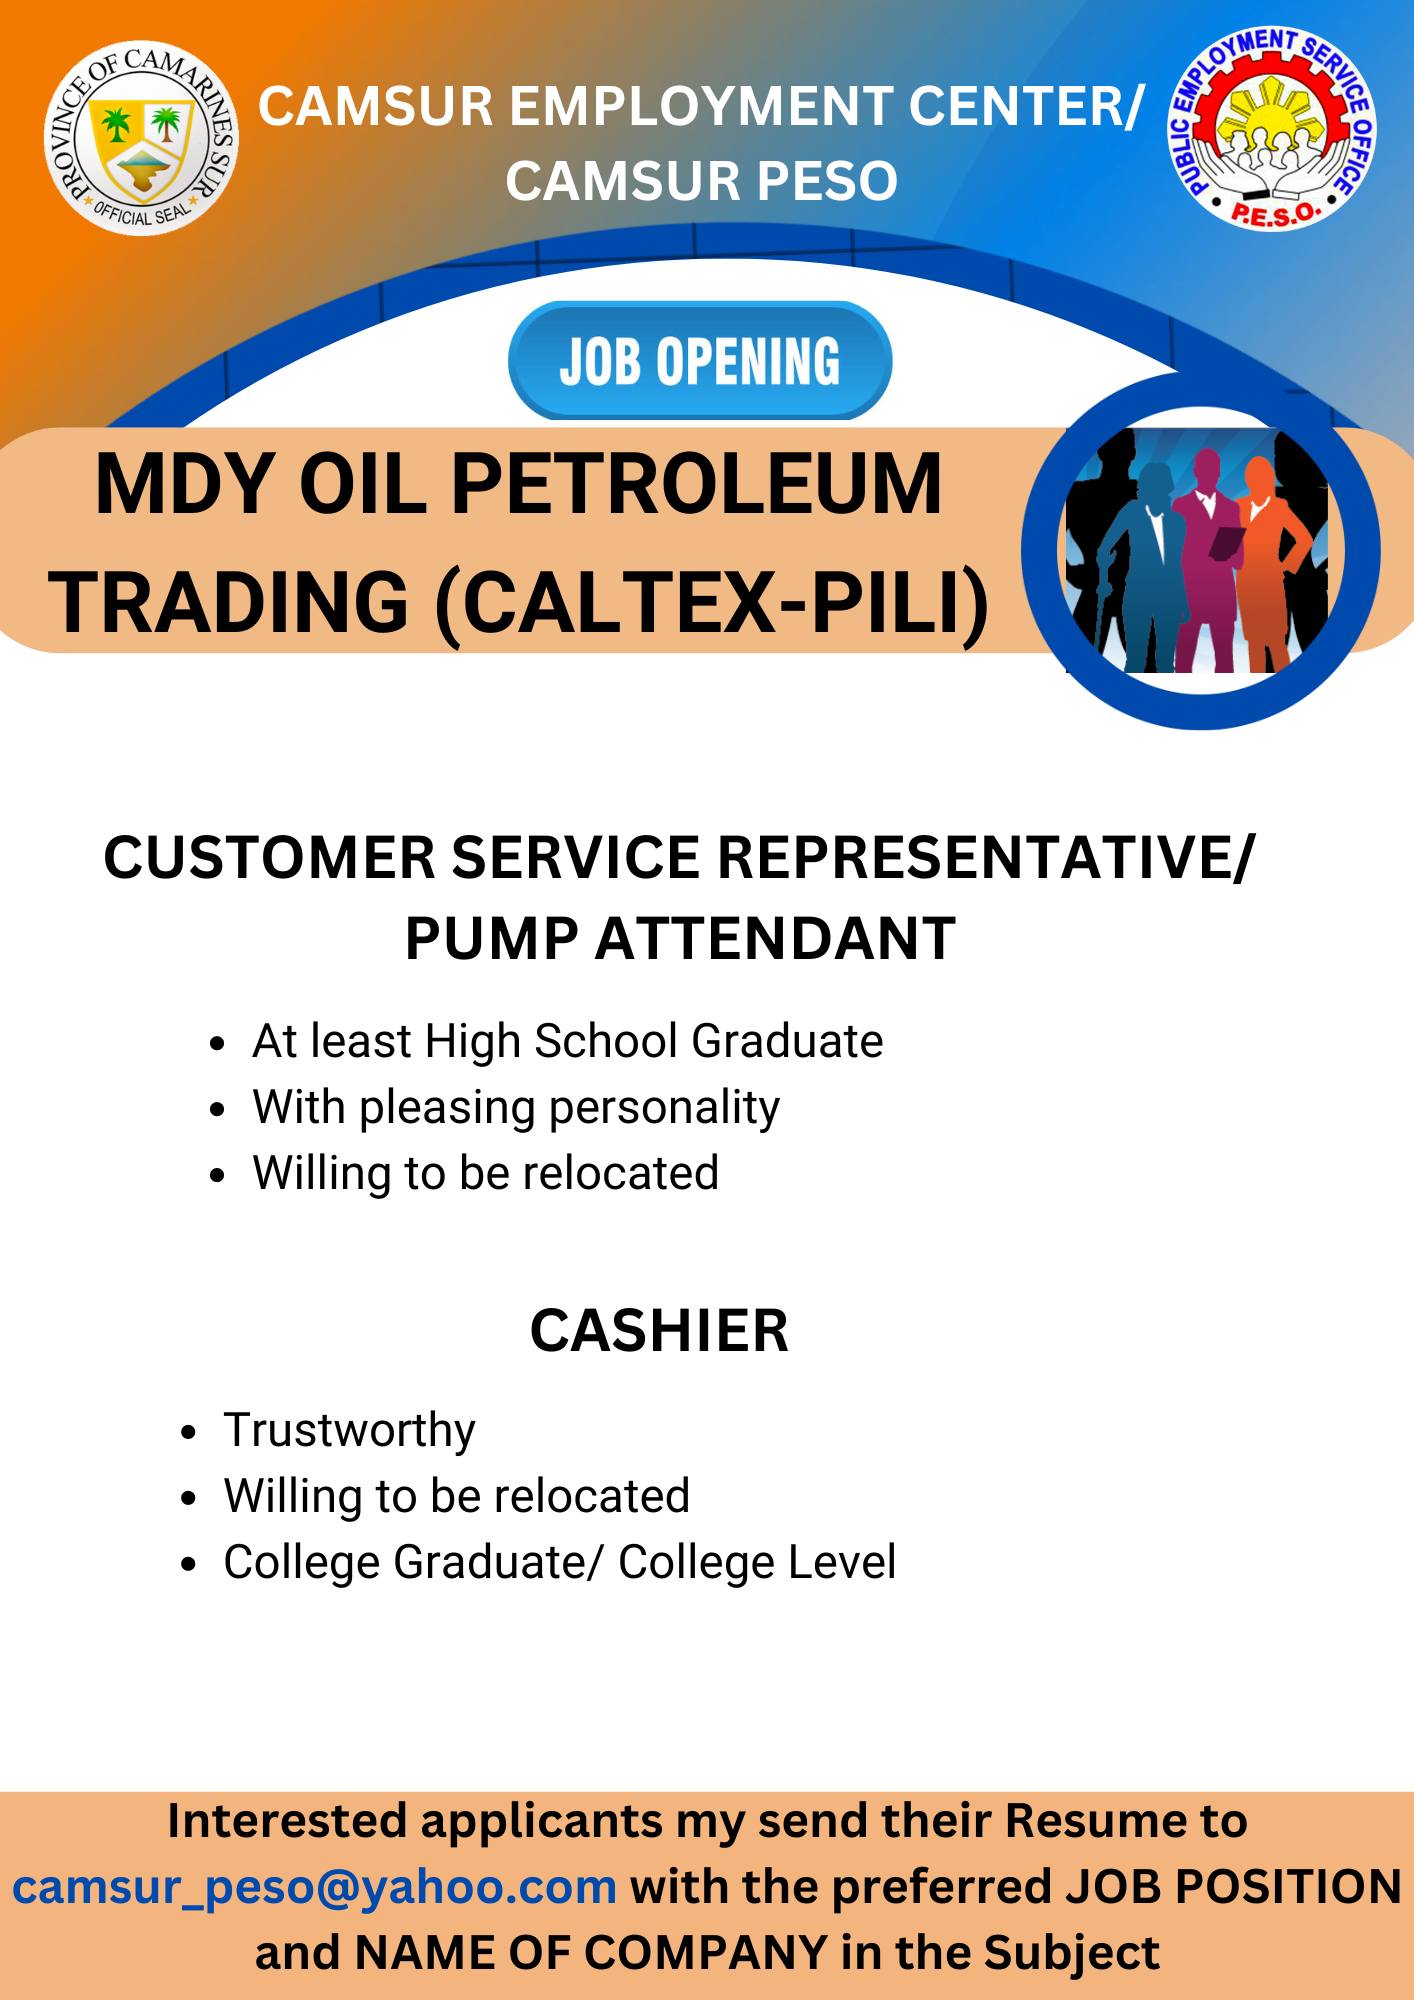 MDY OIL PETROLEUM TRADING (CALTEX-PILI) NOW HIRING!!! - CUSTOMER SERVICE REPRESENTATIVE/ PUMP ATTENDANT, CASHIER